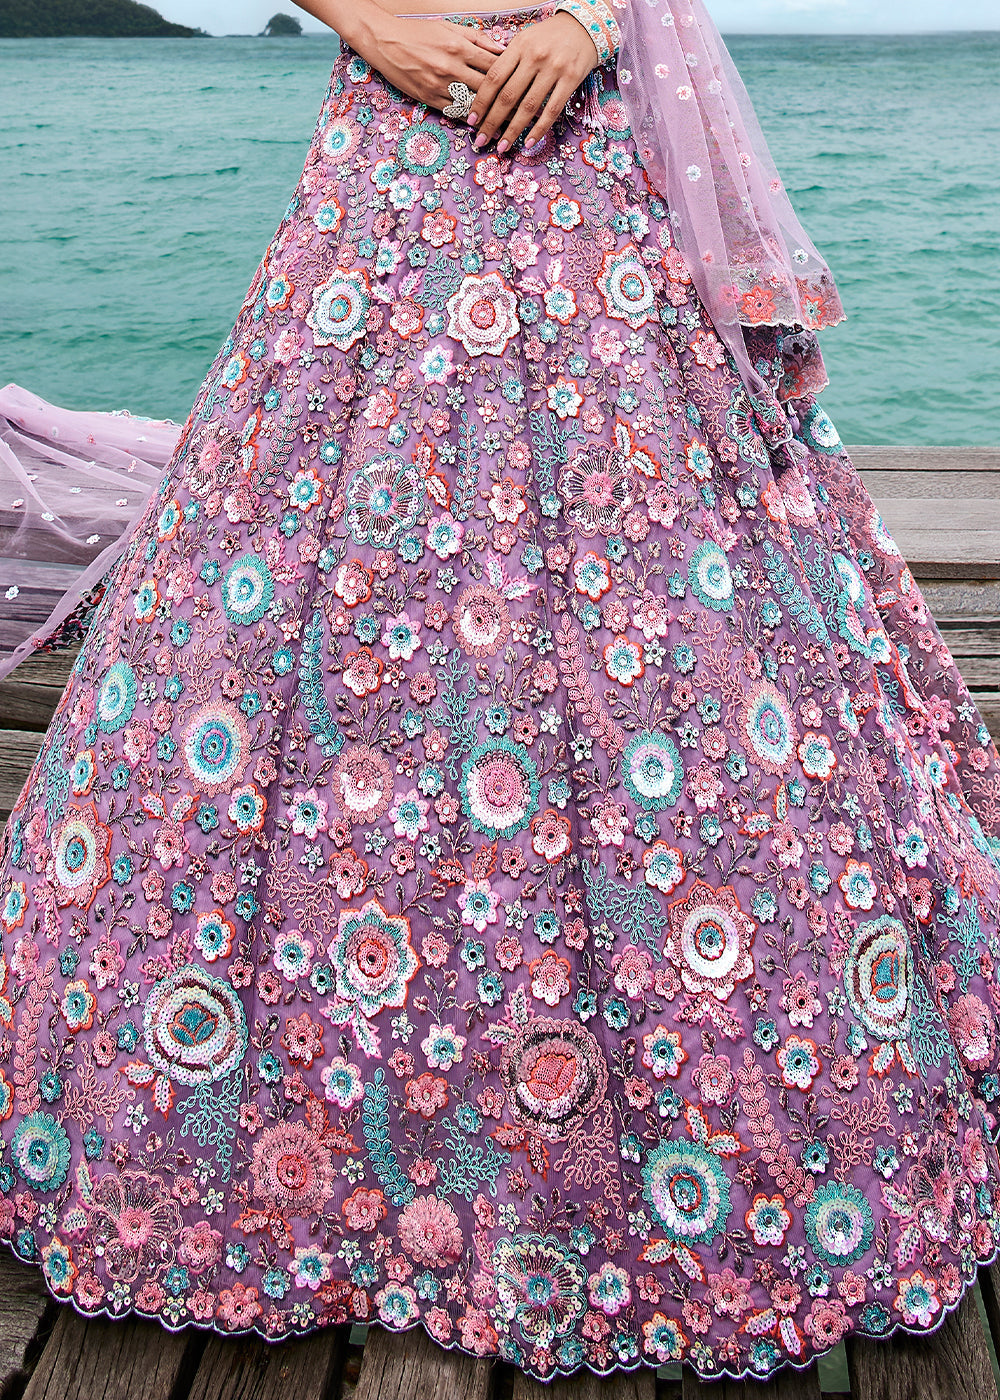 Shades Of Purple Net Lehenga Choli with Sequins,Mirror & Coding Thread Embroidery work